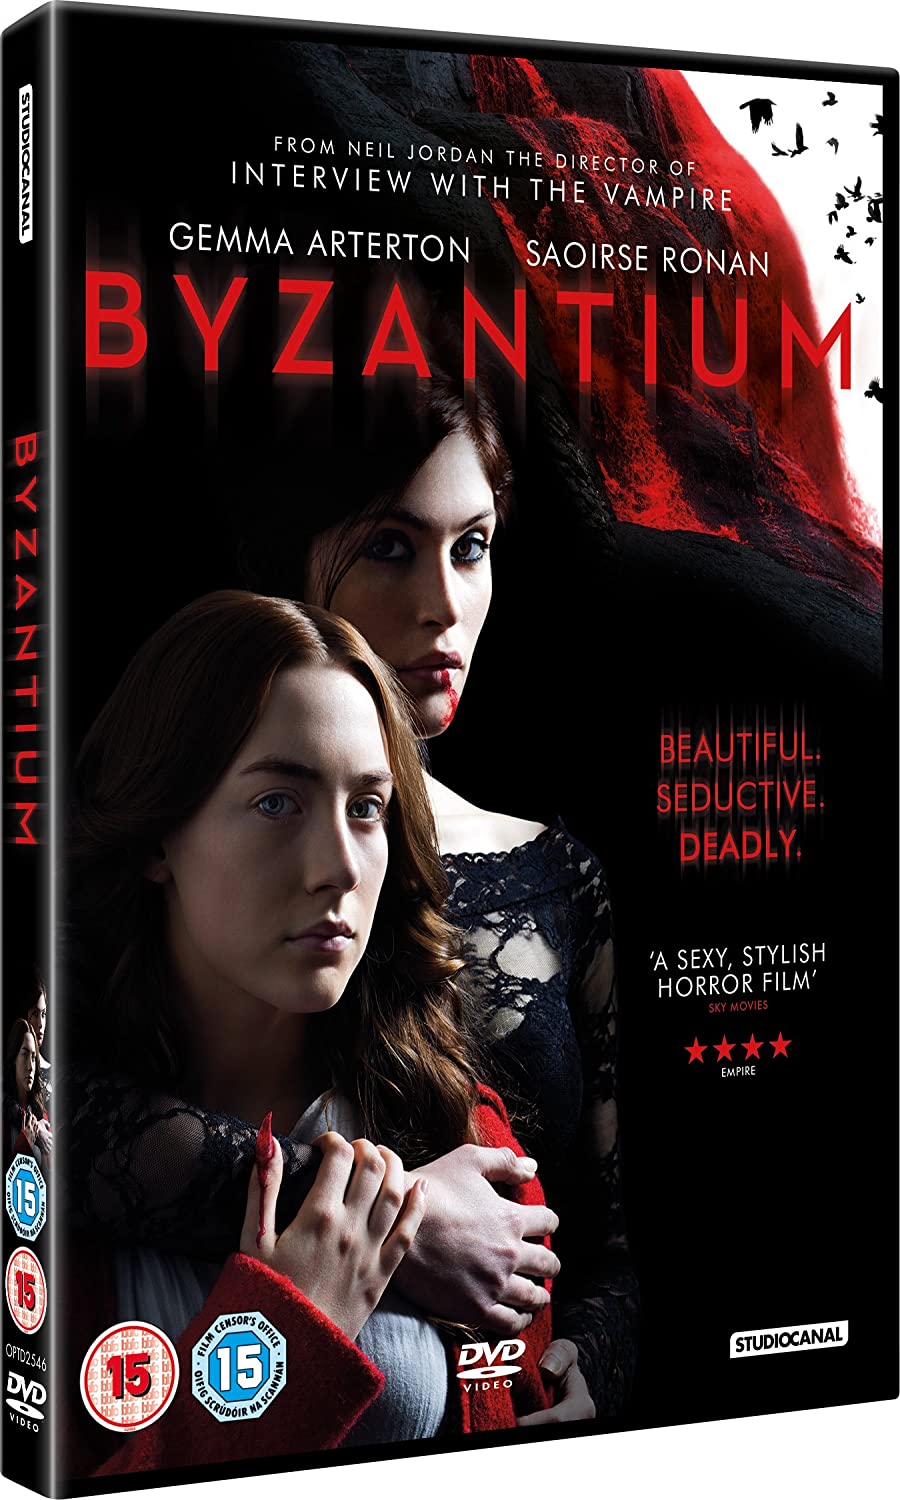 Byzantium [2012] [2013] Horror/Fantasy [DVD]